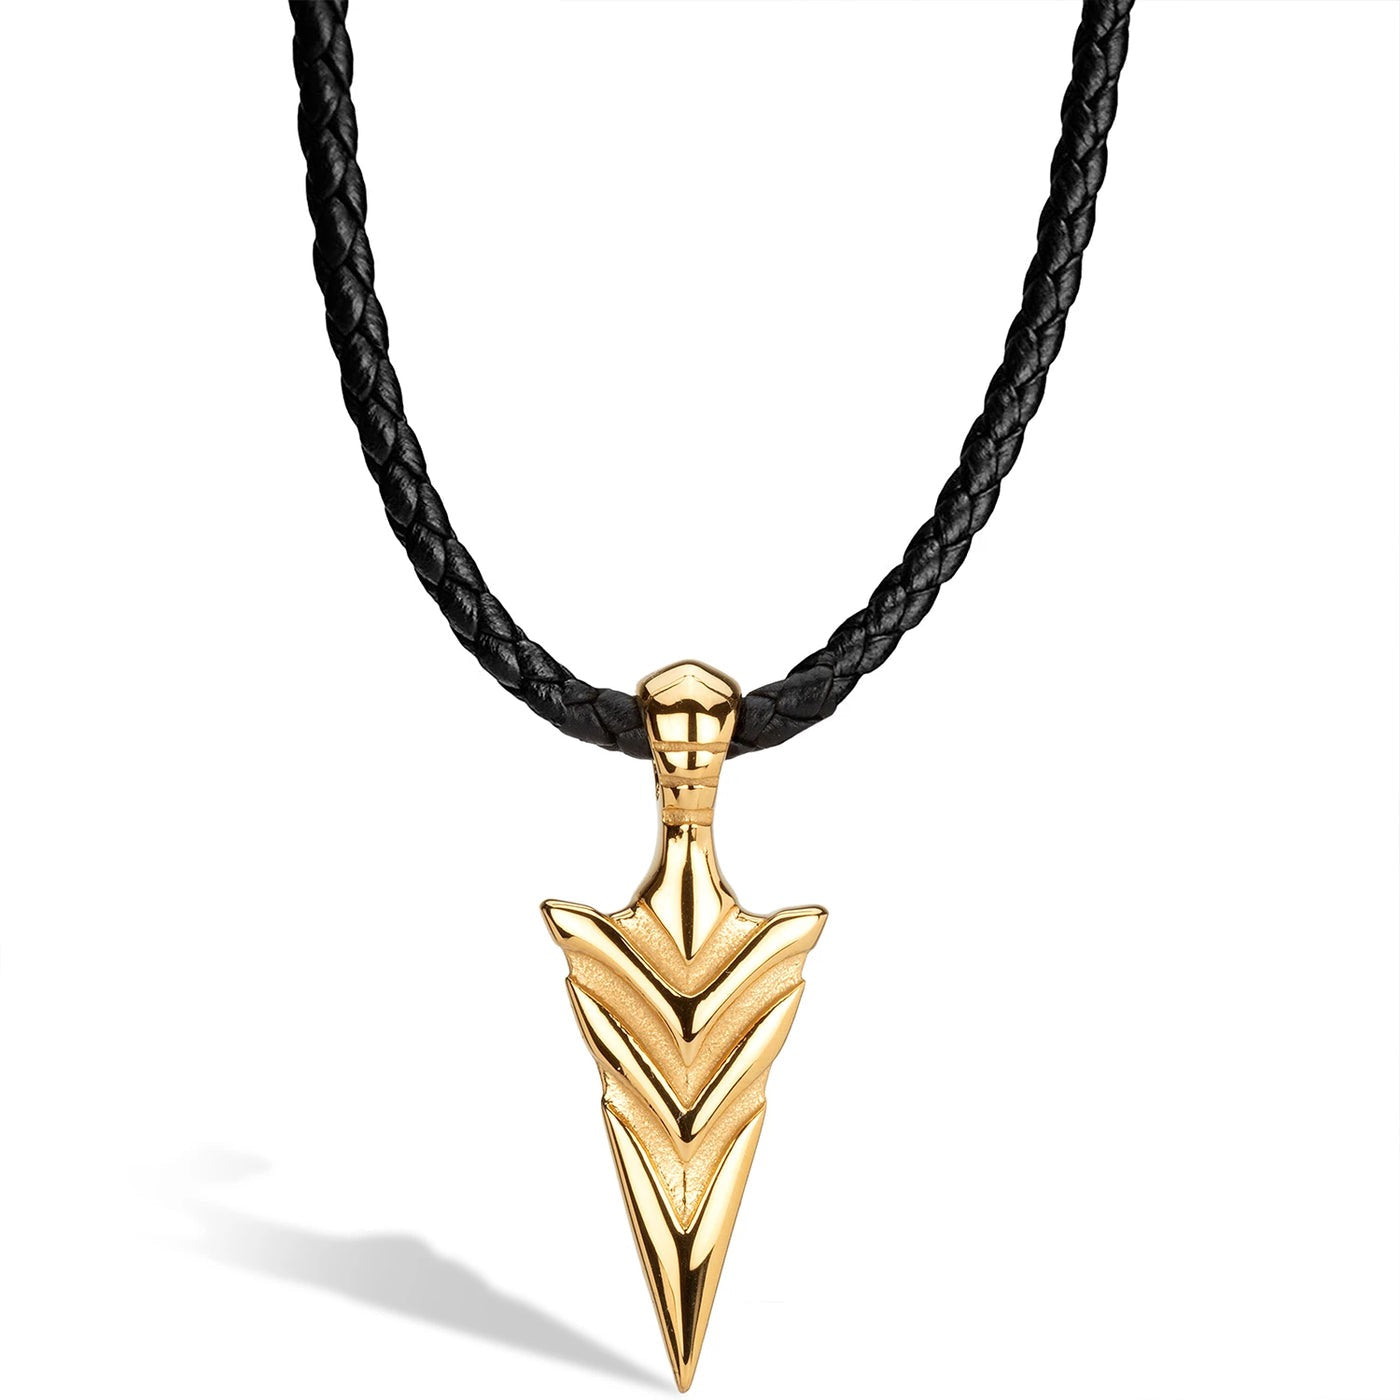 Lederhalskette "Arrow" - die elegante Lederhalskette, perfekt für jedes Outfit - GOLD